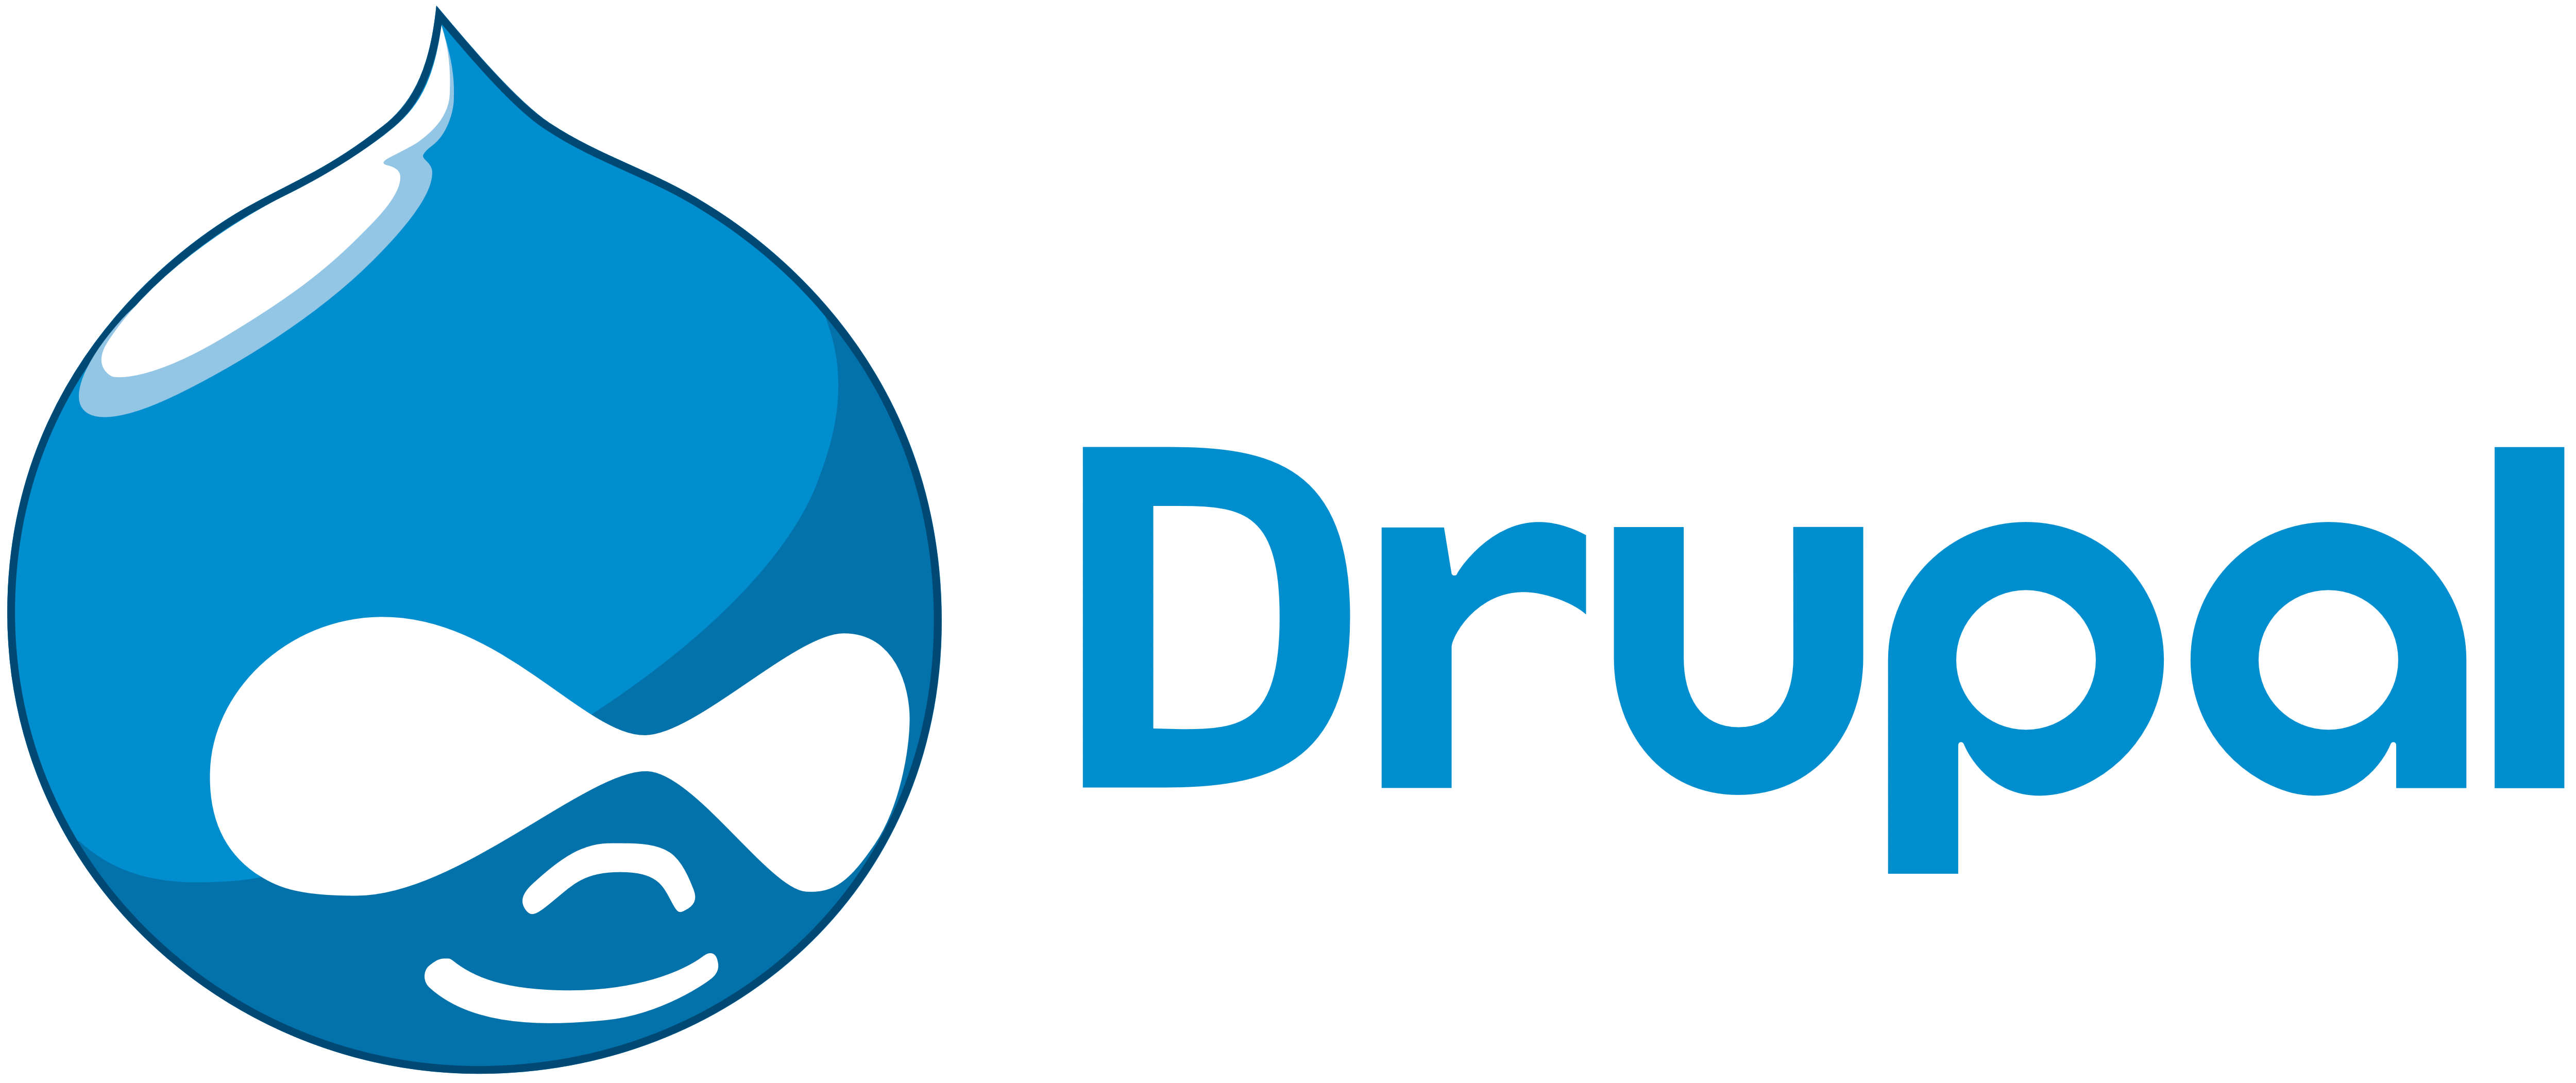 Drupal developers in bangalore, WebSpotLight